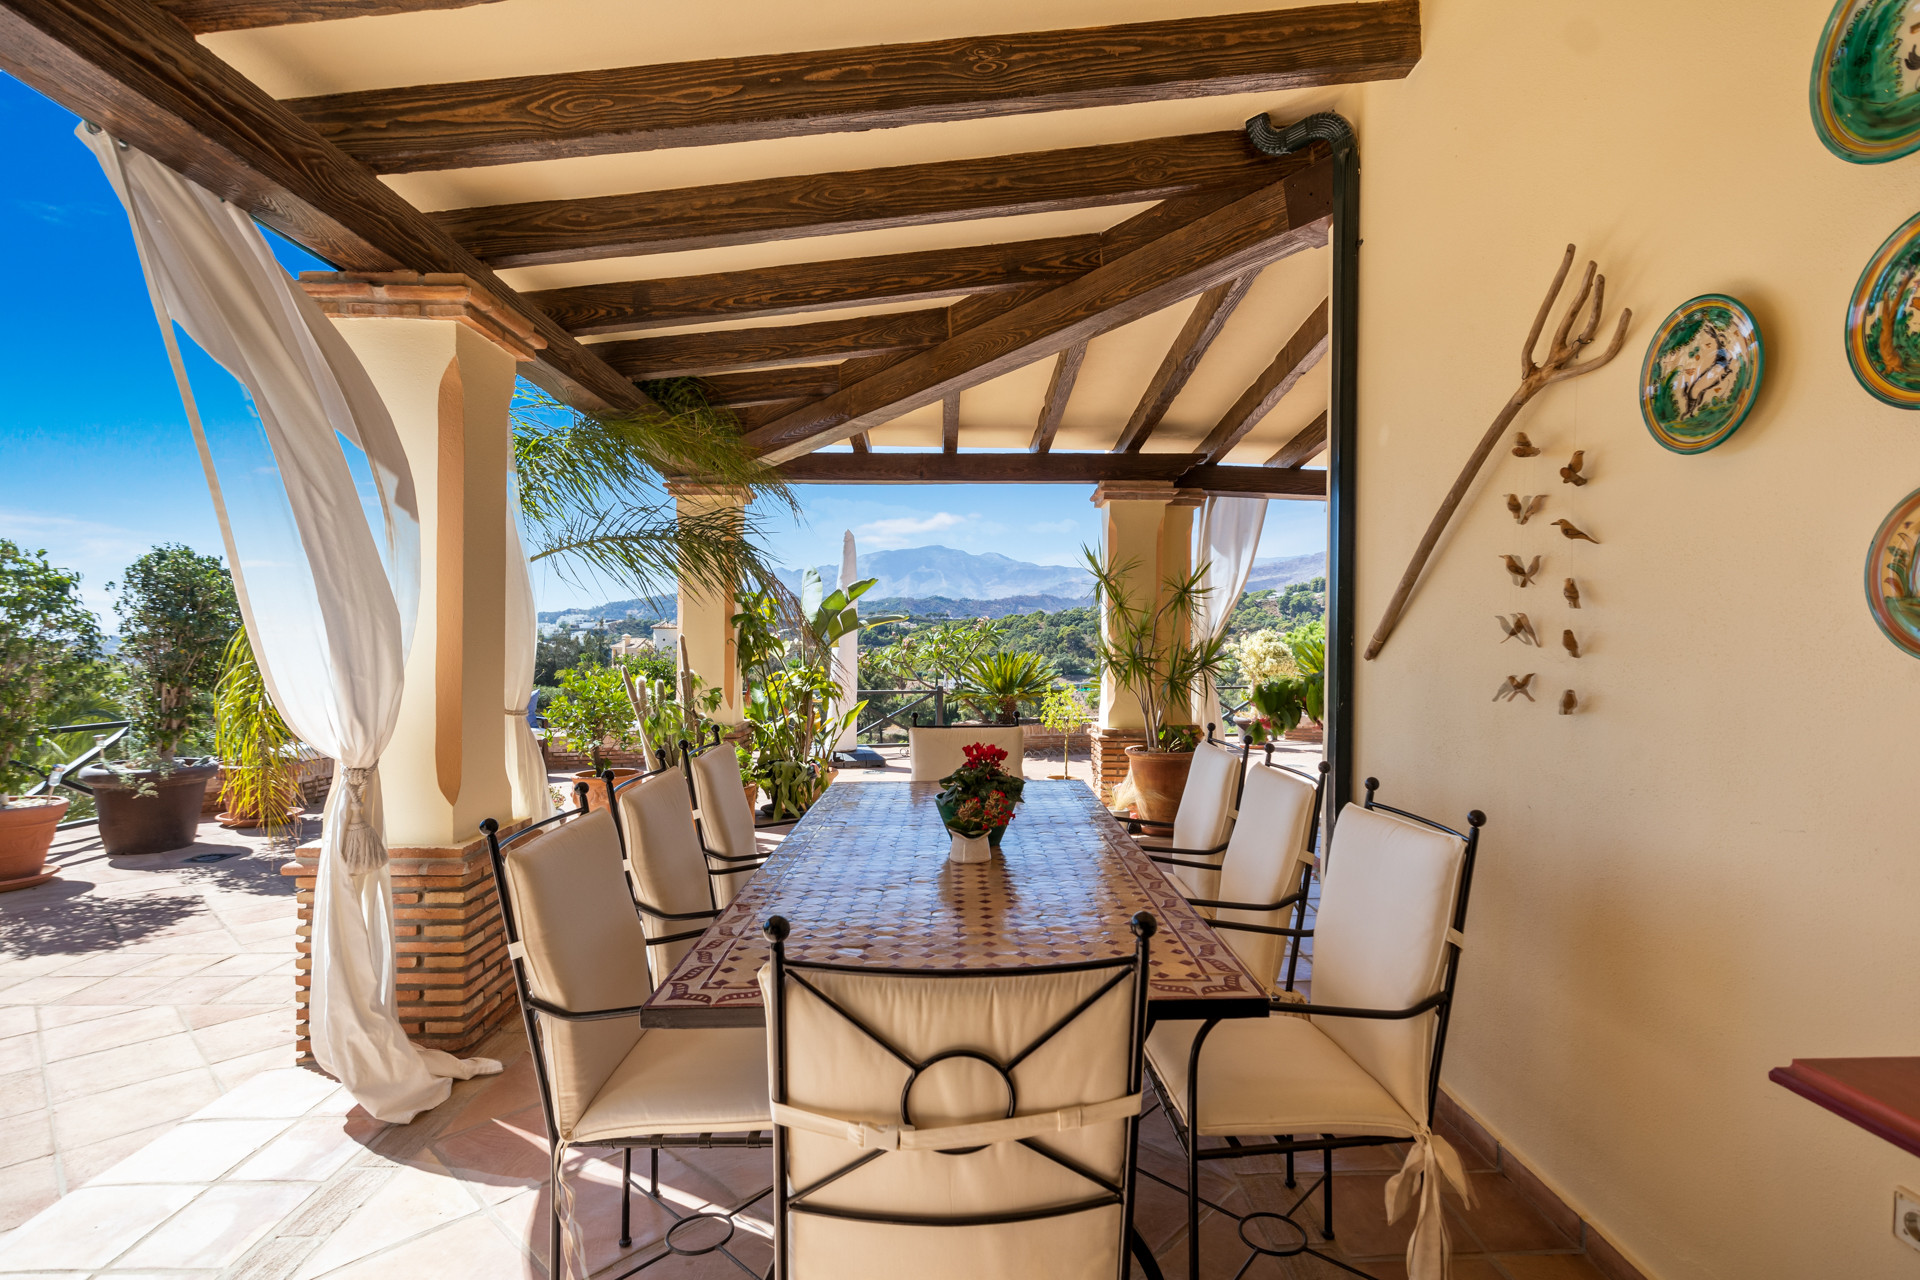 Frontline golf villa with fantastic views in Marbella Club Golf Resort